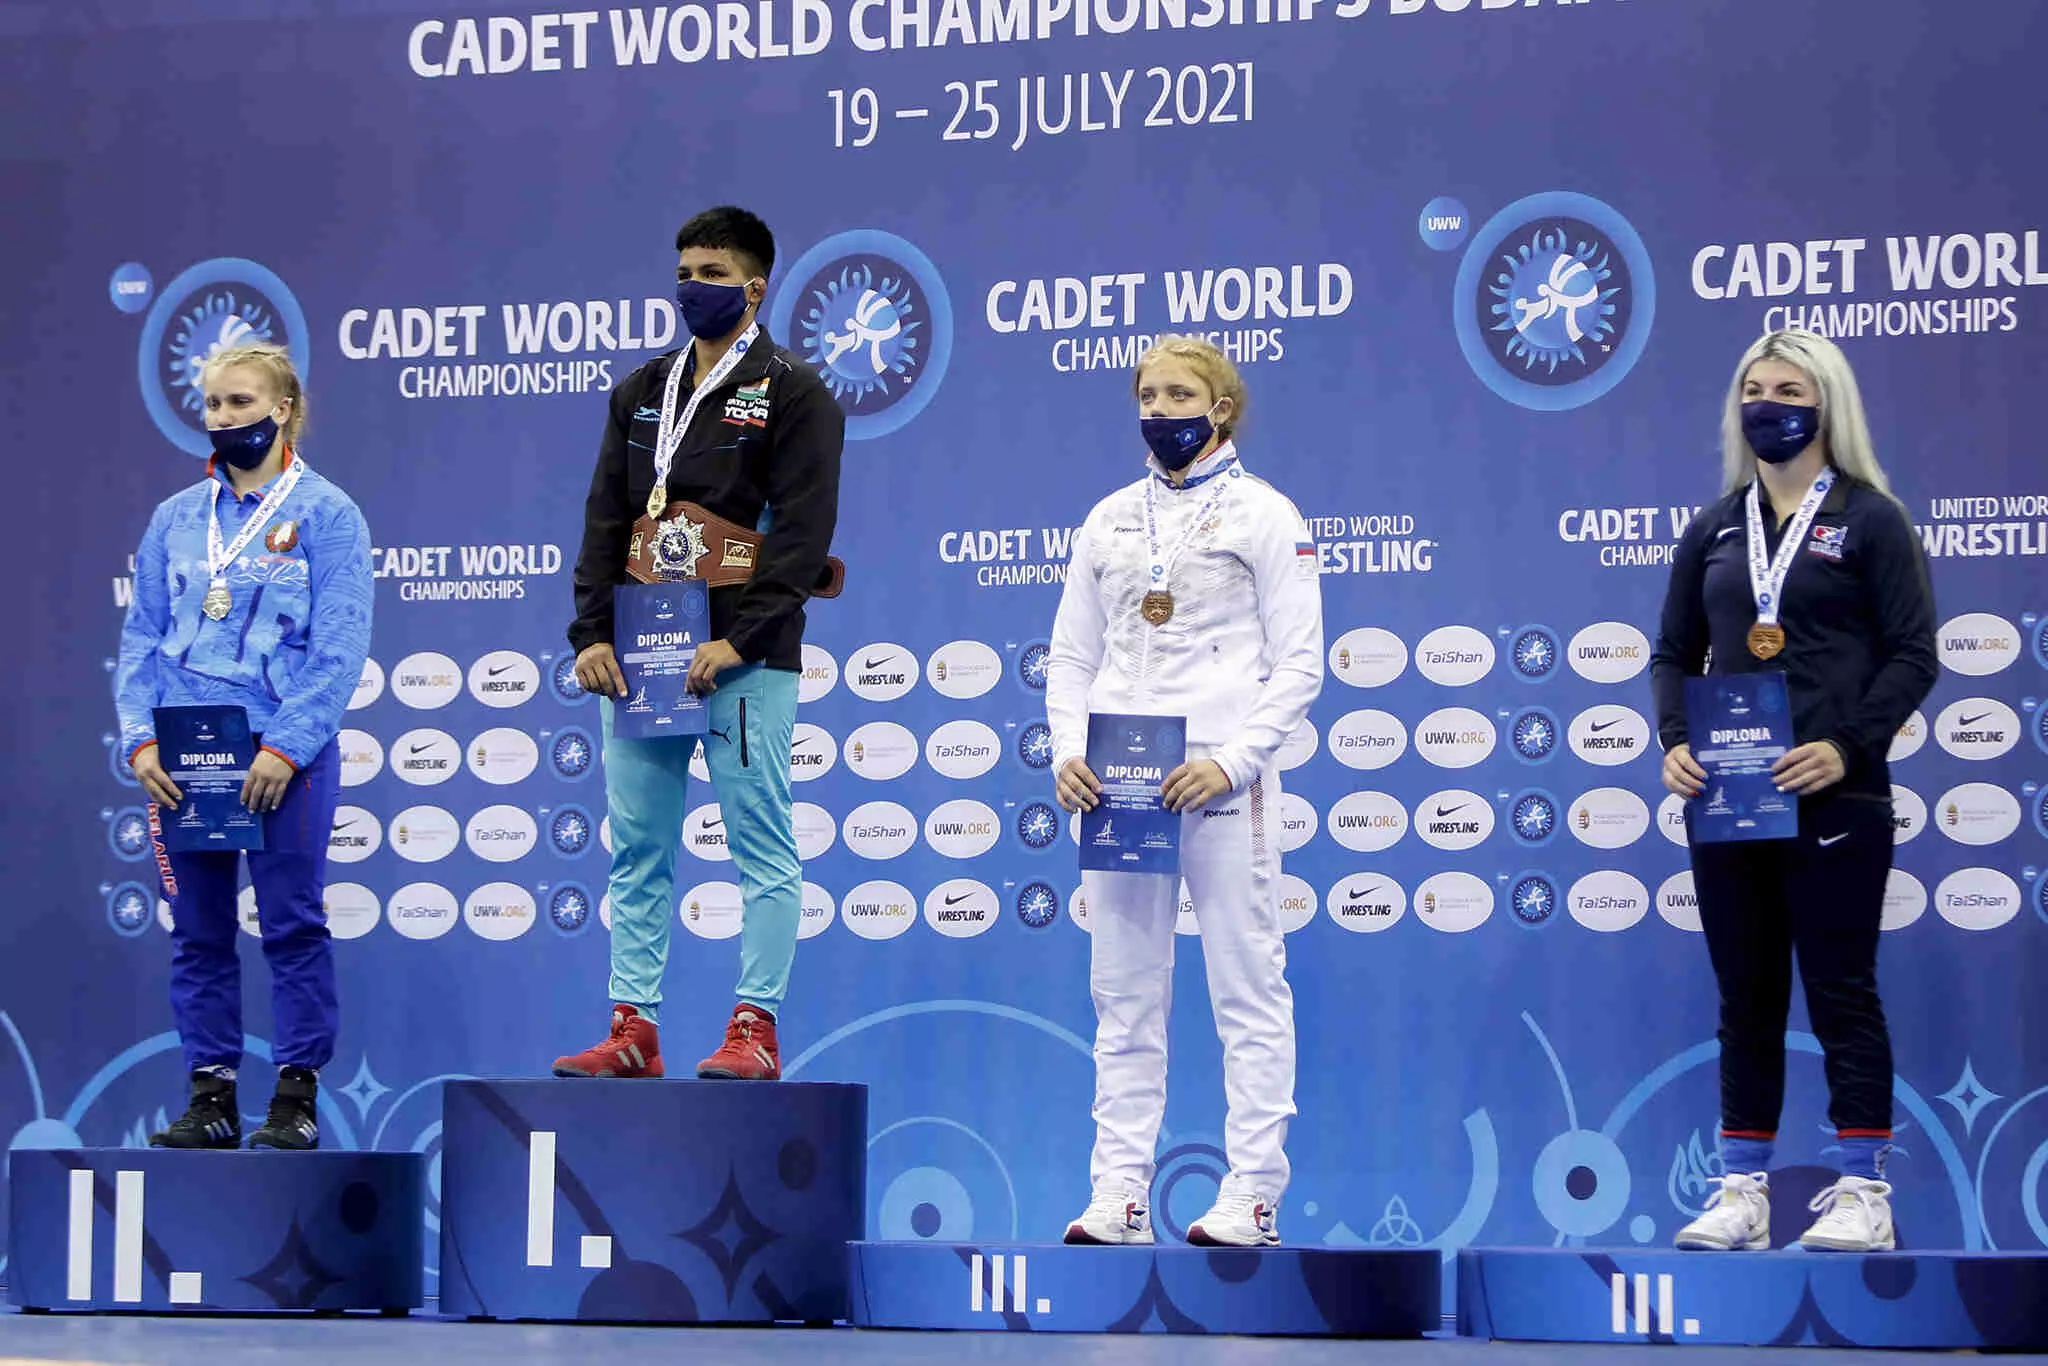 Priya Malik on the Podium at the Cadet World Championship. 